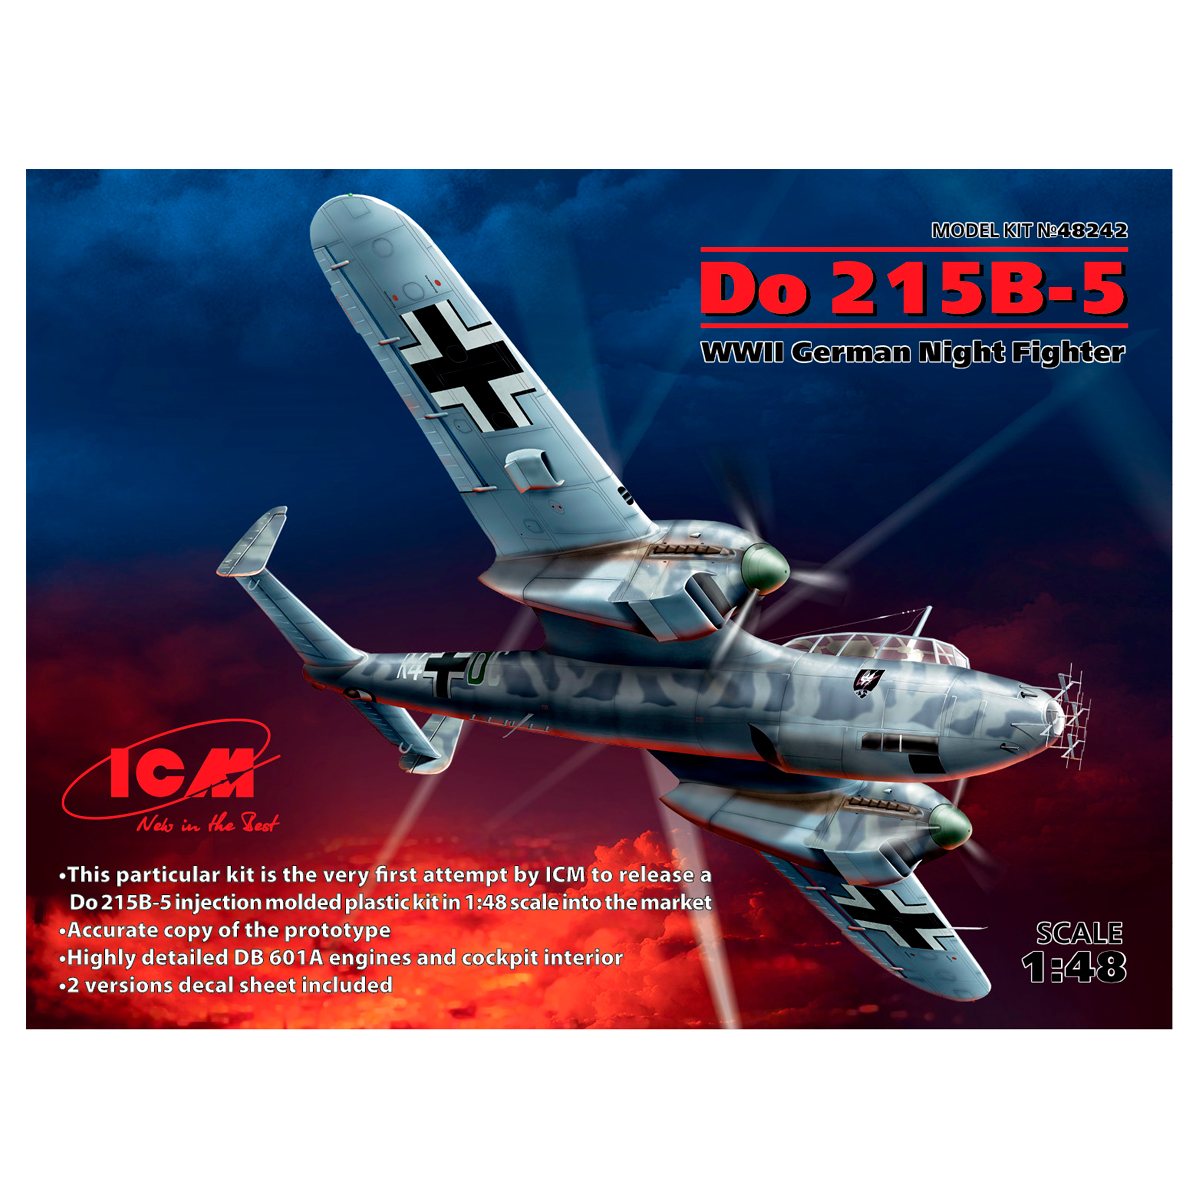 Do 215 B-5, WWII German Night Fighter 1/48